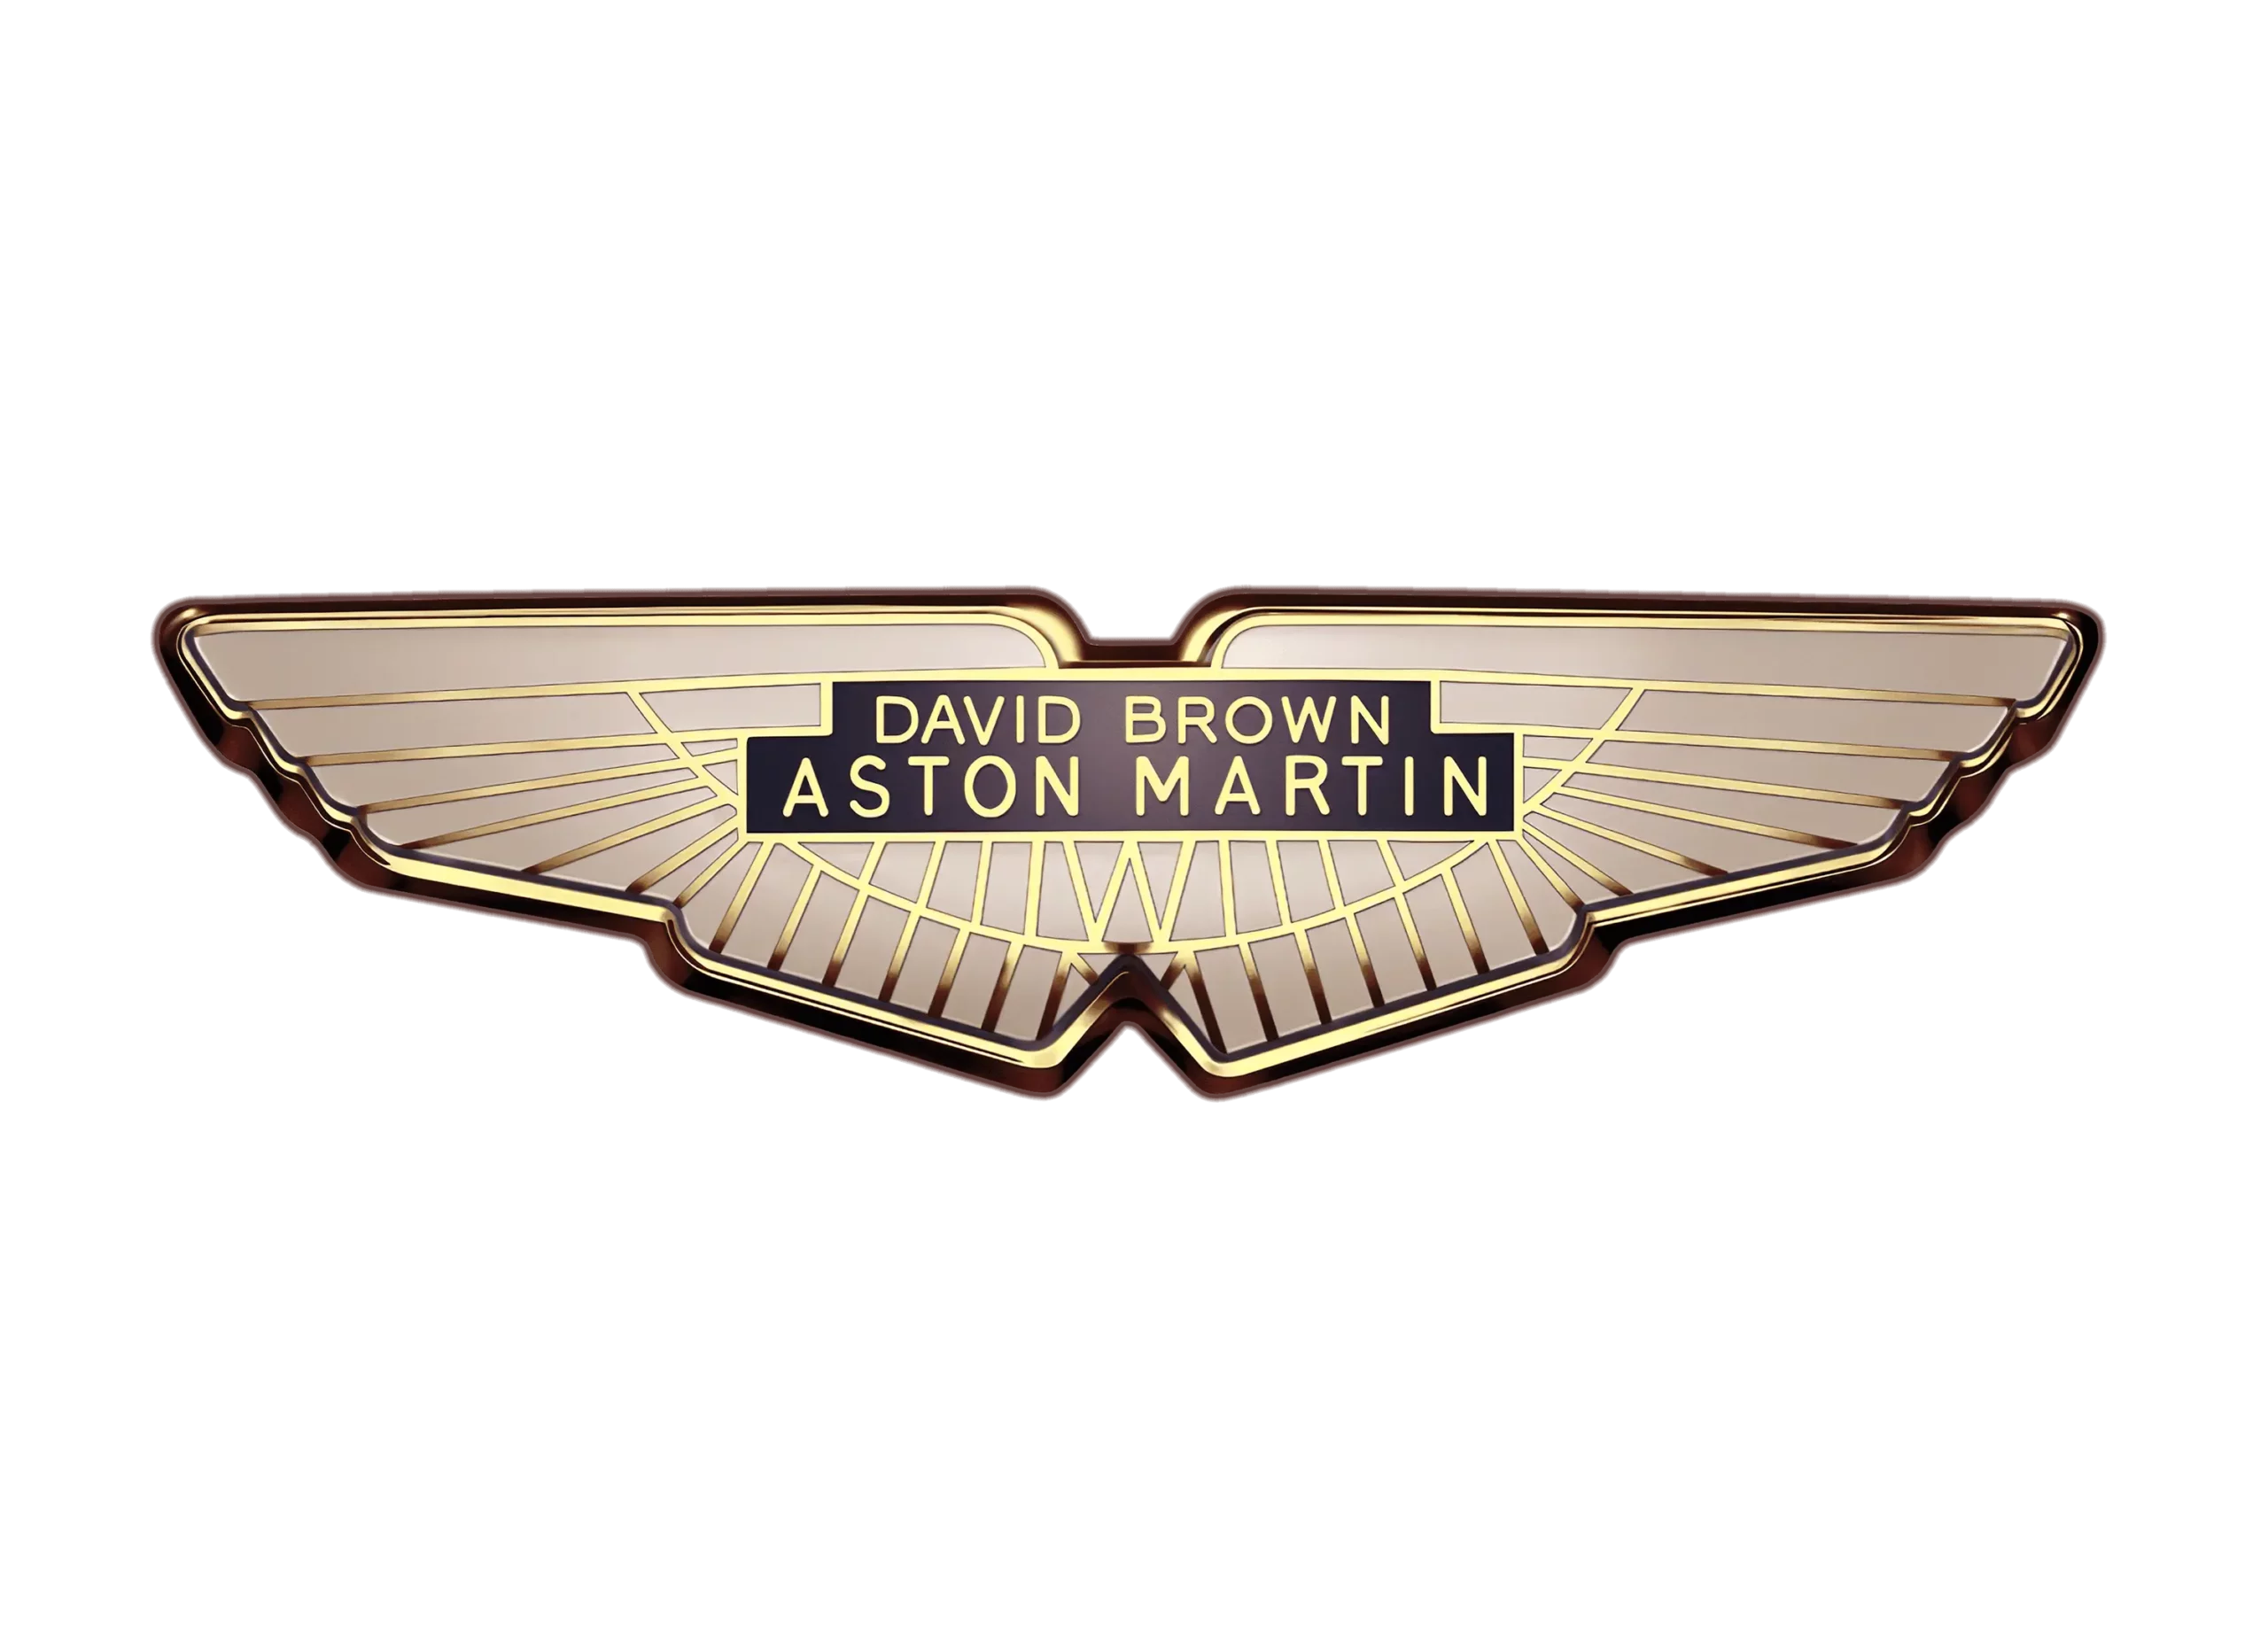 Aston Martin logo 1971-1972